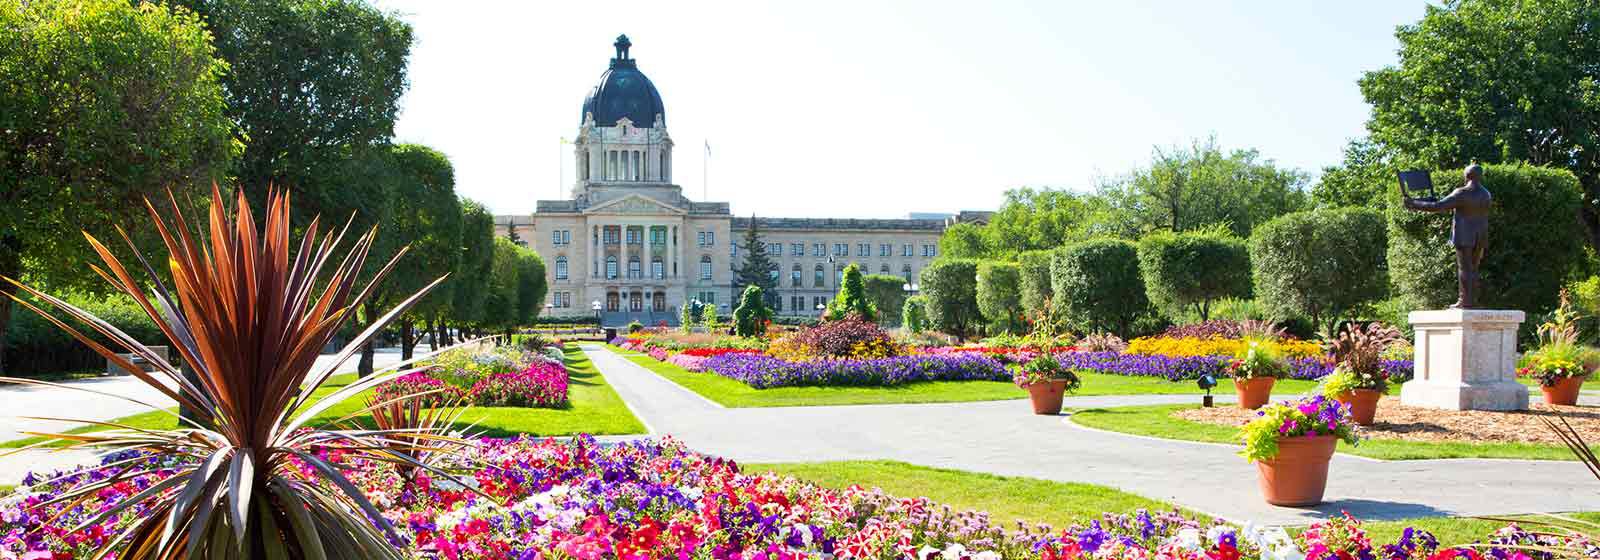 Saskatchewan Legislature Building with garden of flowers and trees in foreground